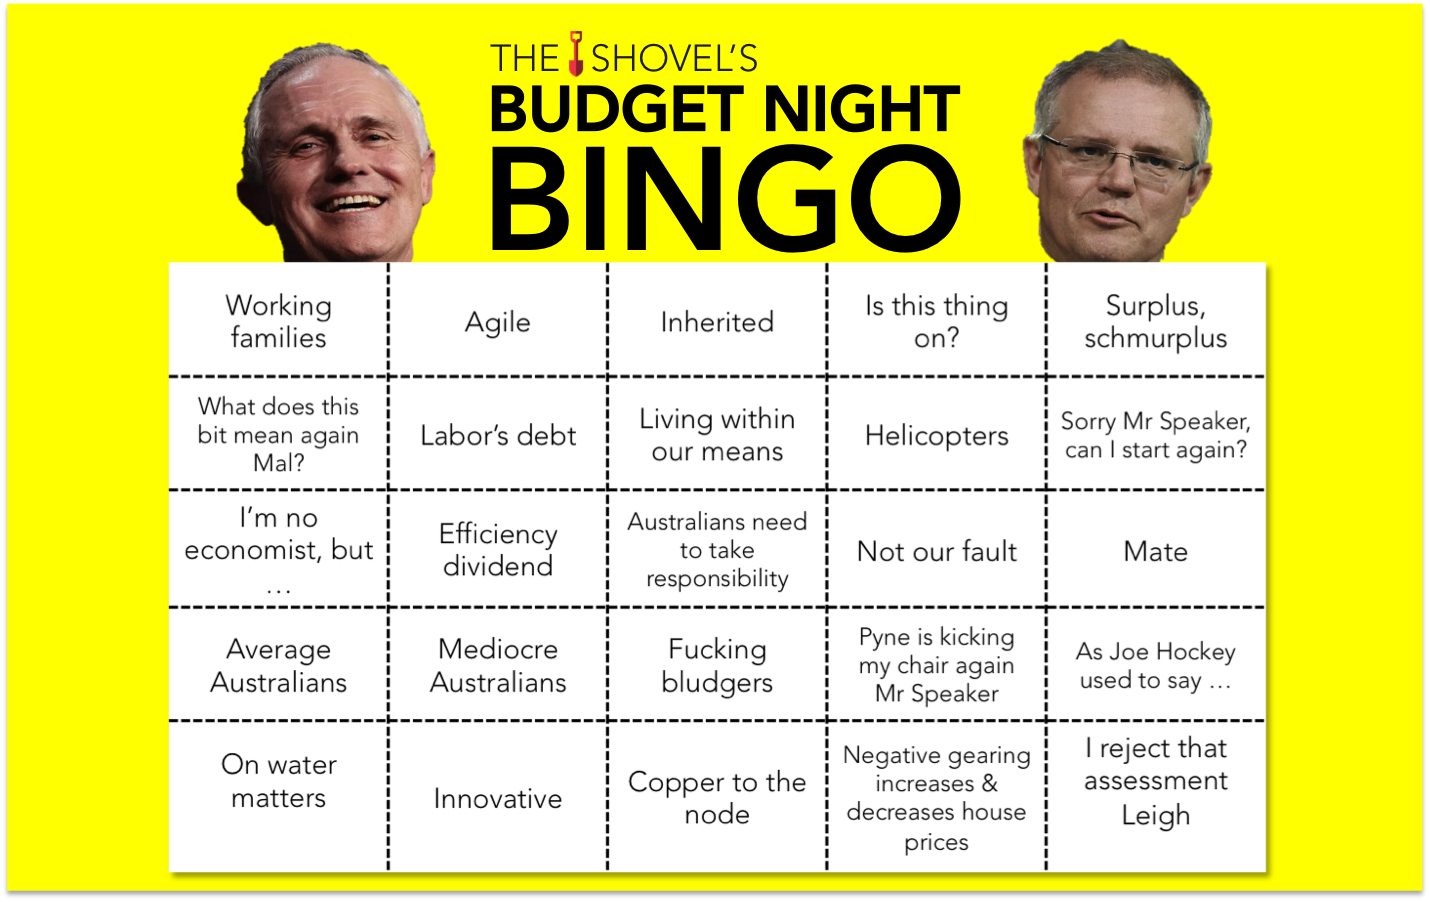 the shovel's budget night bingo